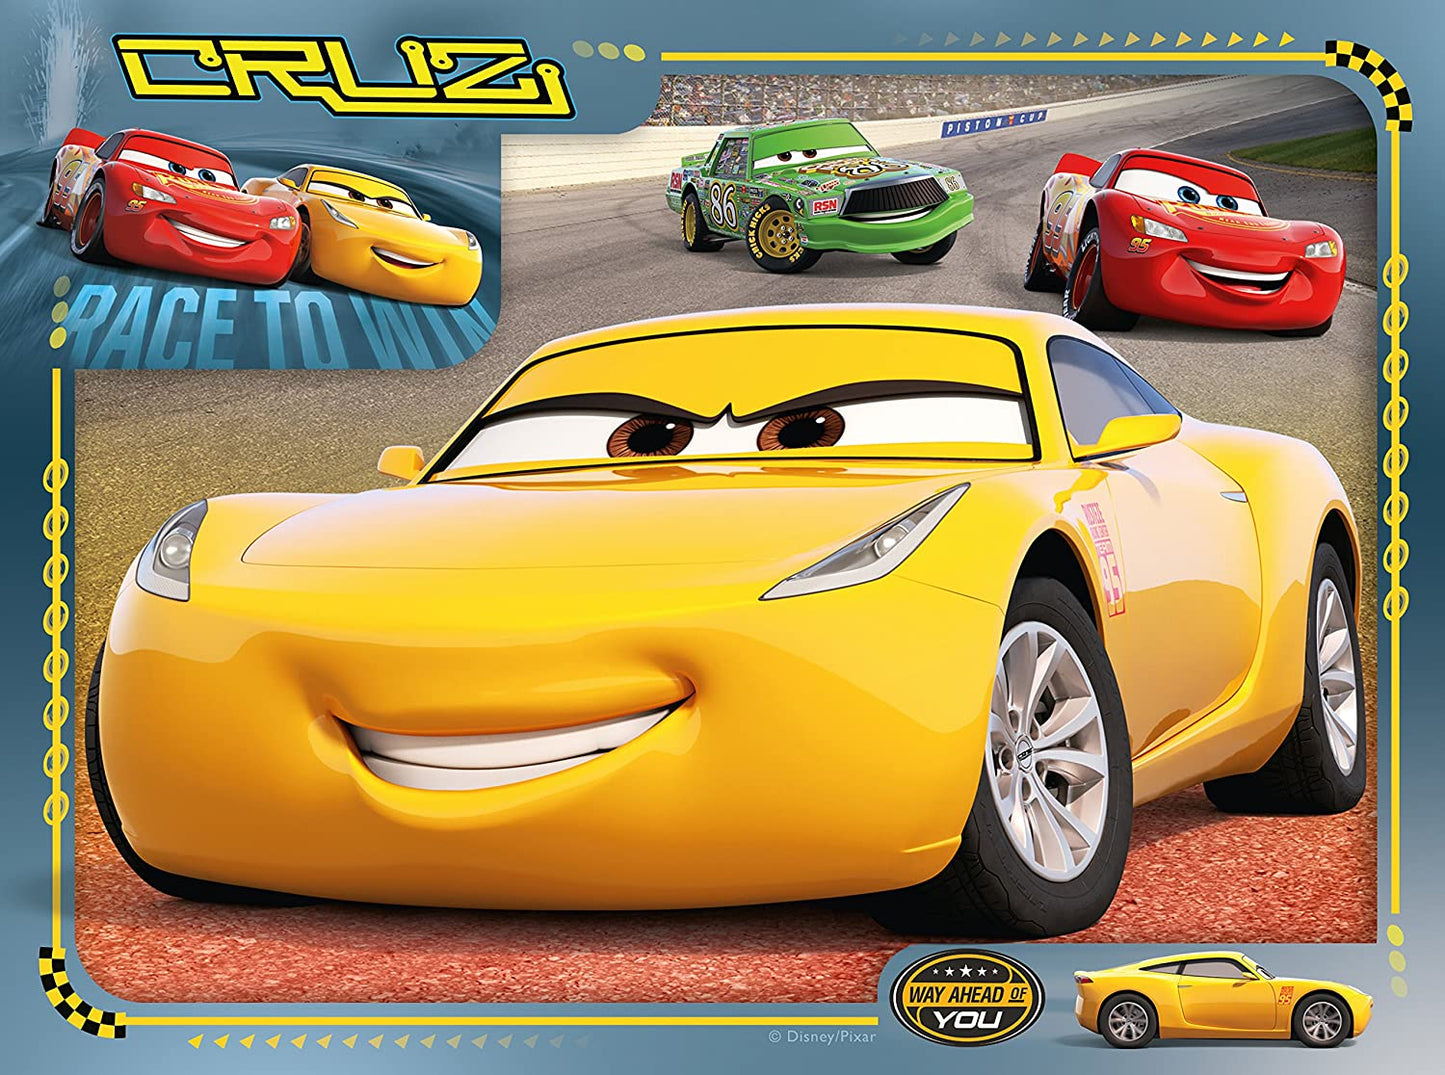 Ravensburger - Disney Pixar Cars 3, 4 in a Box  -  12, 16, 20, 24 Piece Jigsaw Puzzles